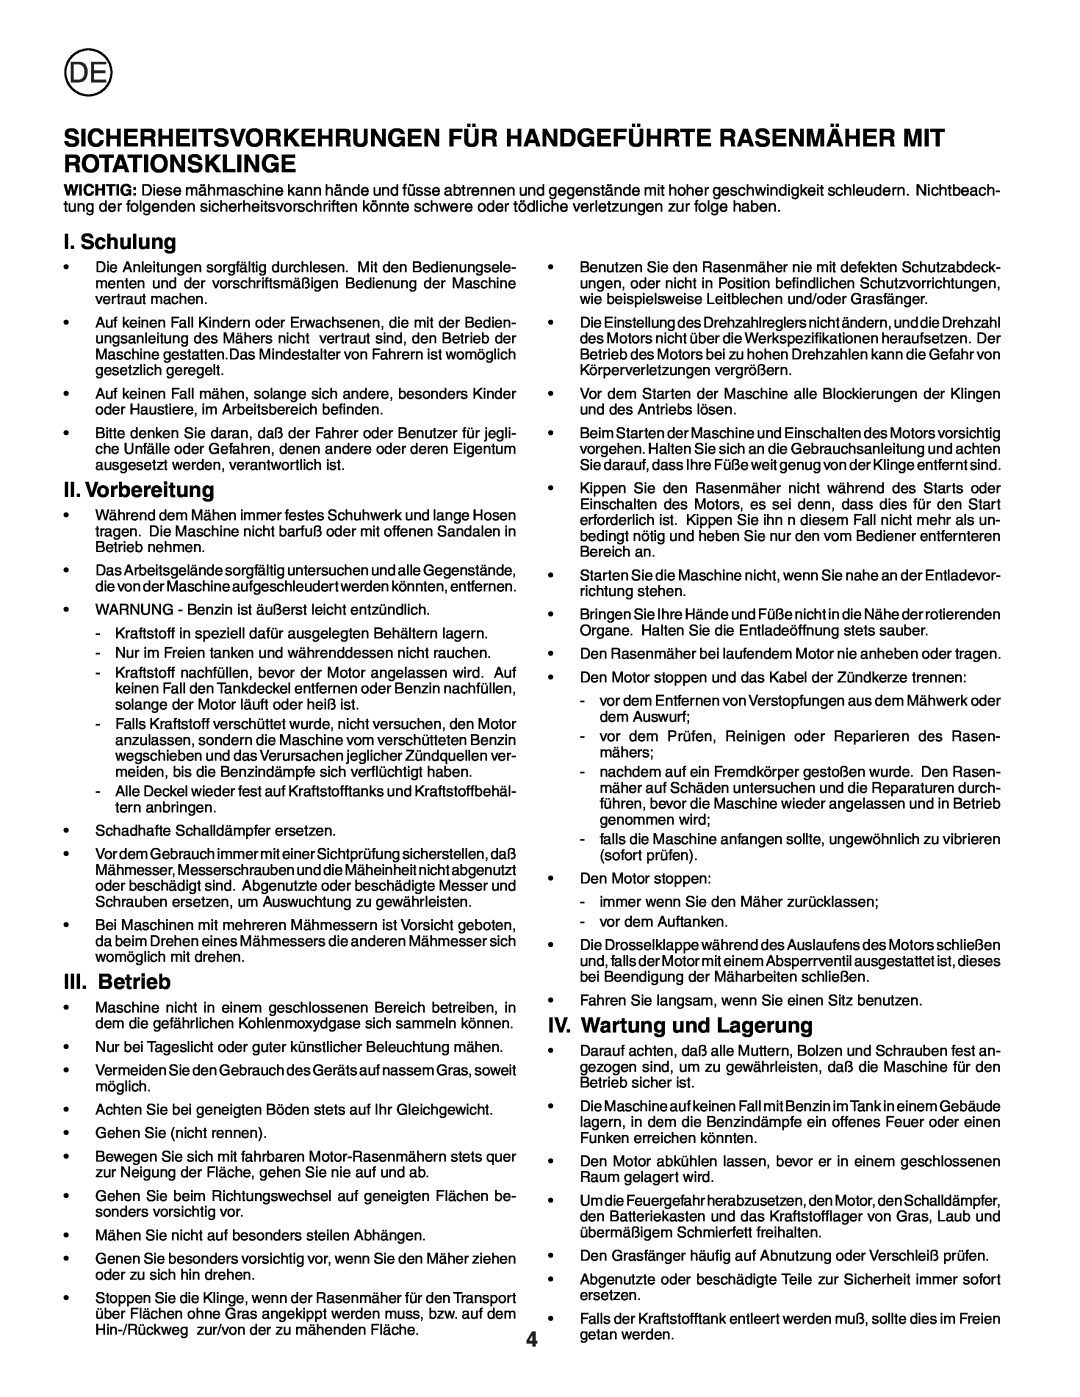 Husqvarna J50 instruction manual I. Schulung, II. Vorbereitung, III. Betrieb, IV. Wartung und Lagerung 